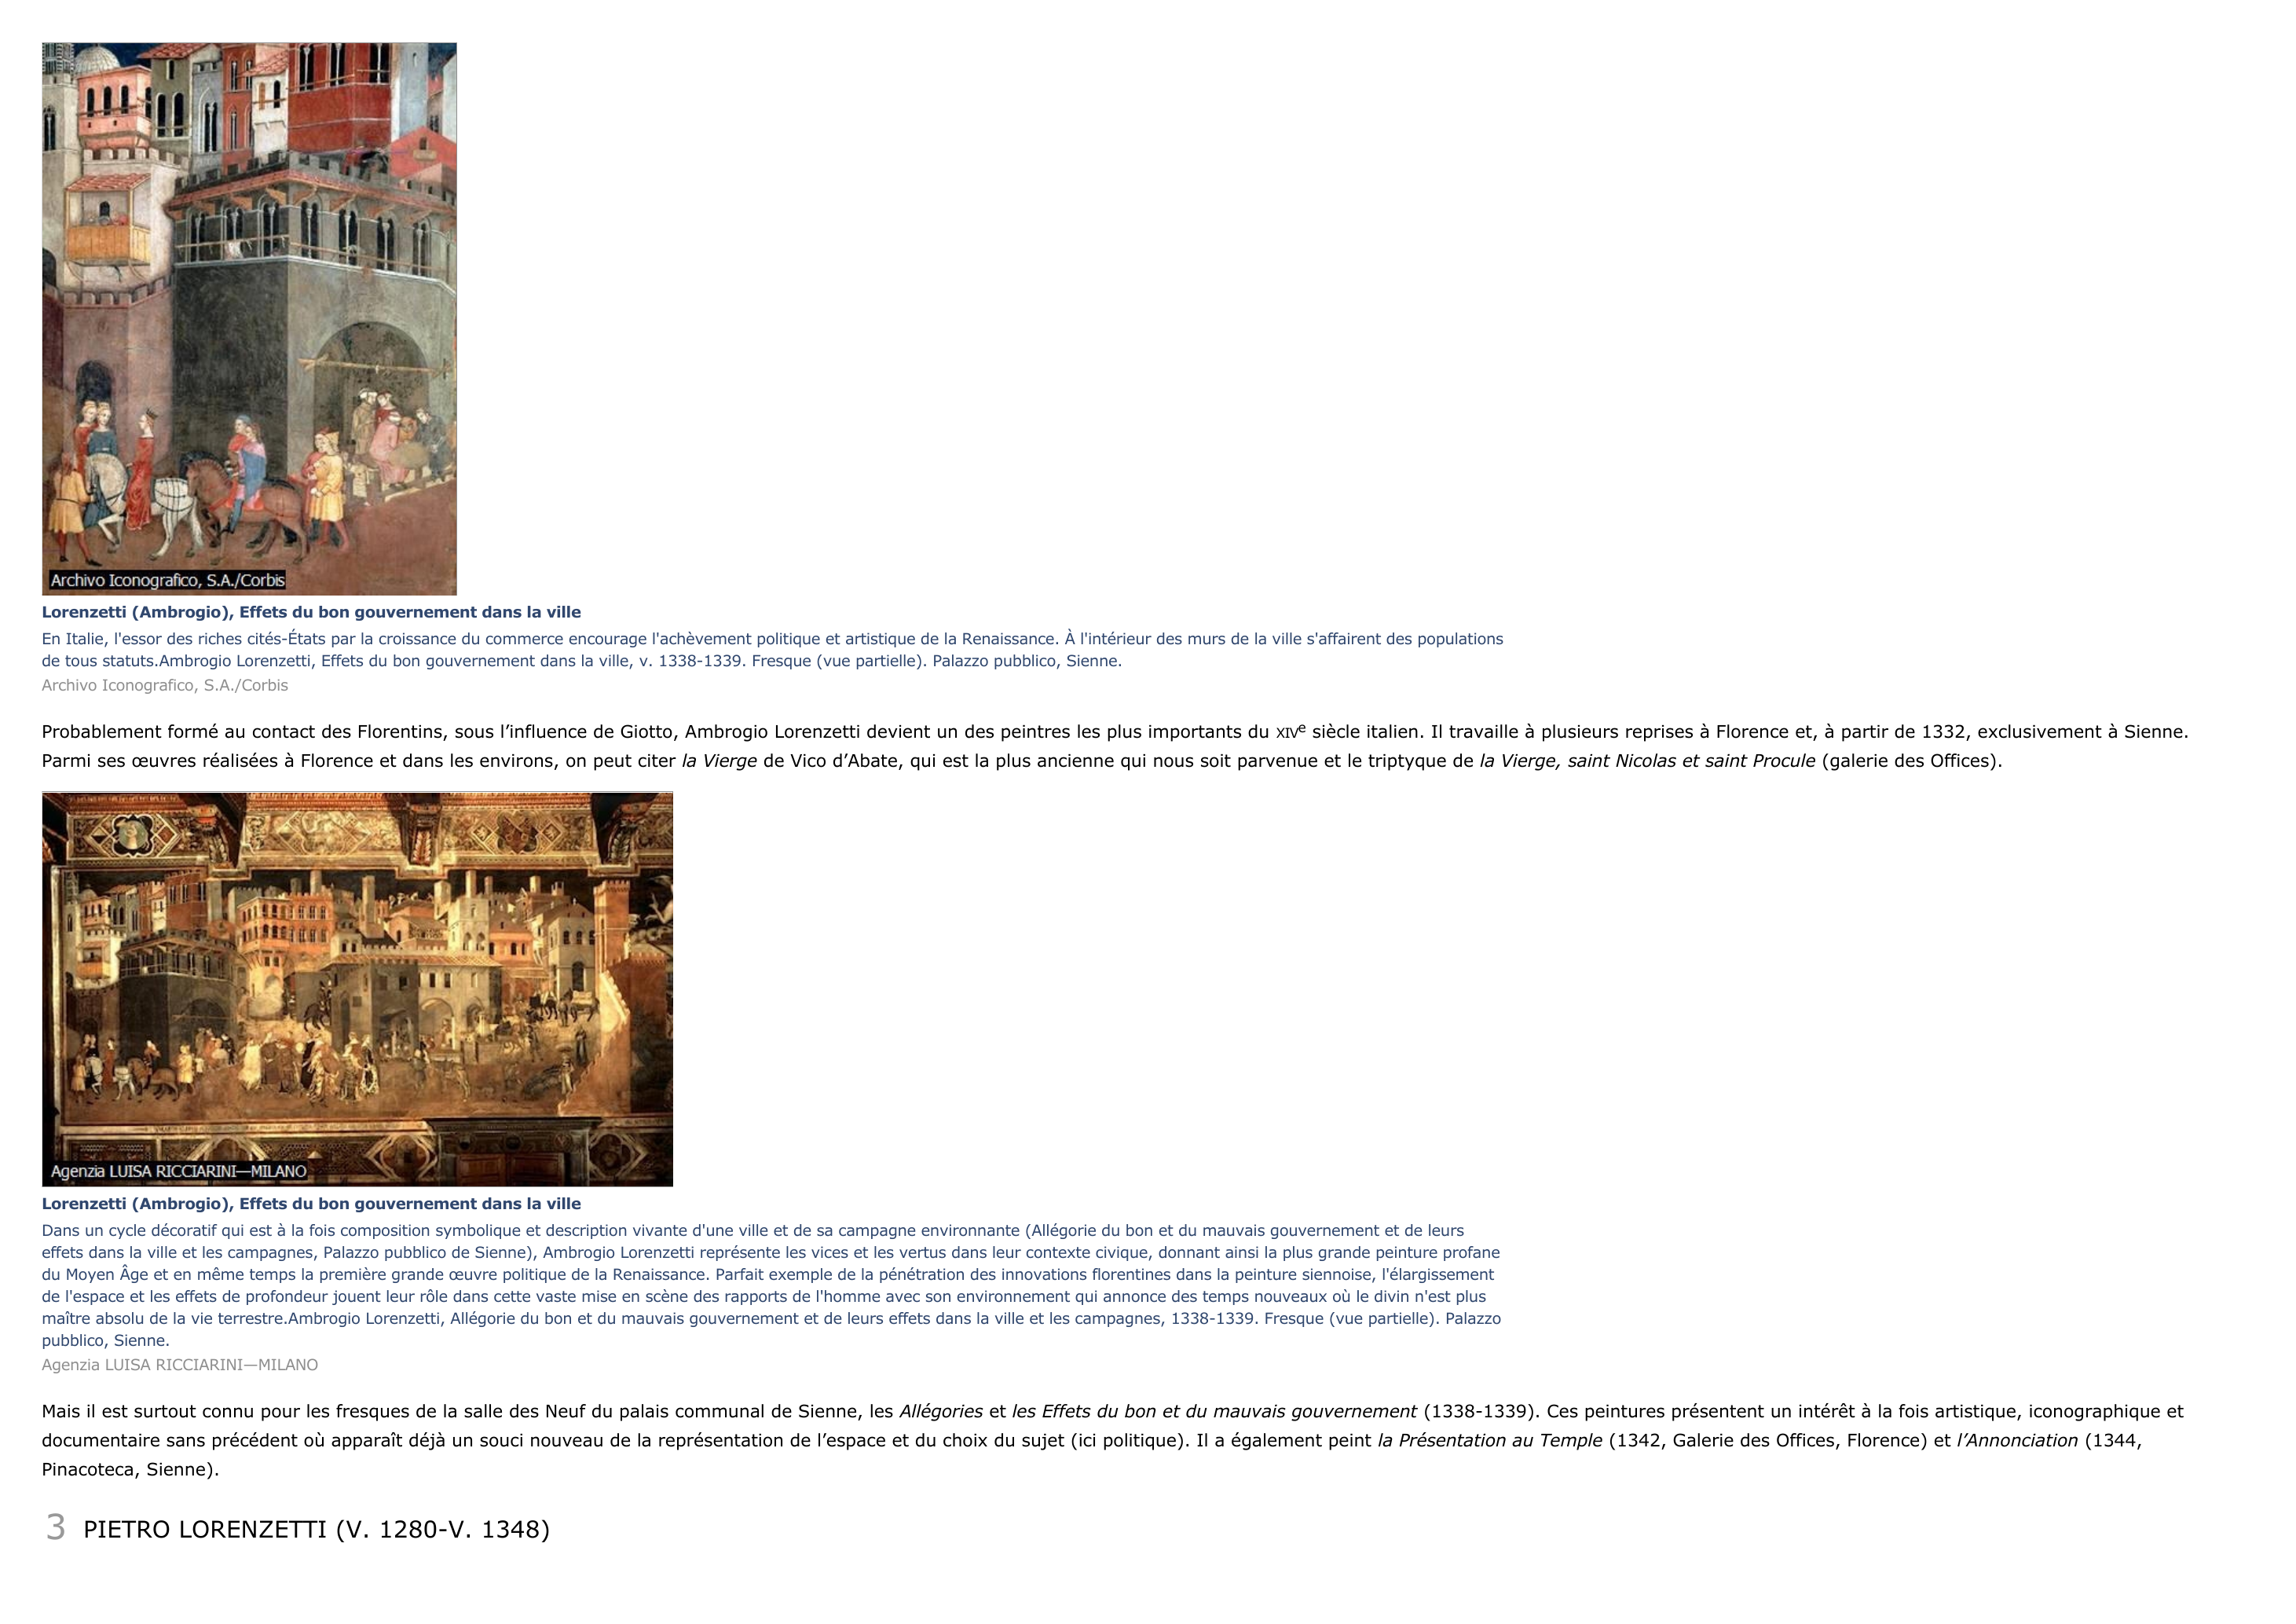 Prévisualisation du document Lorenzetti, Pietro et Ambrogio - biographie du peintre.